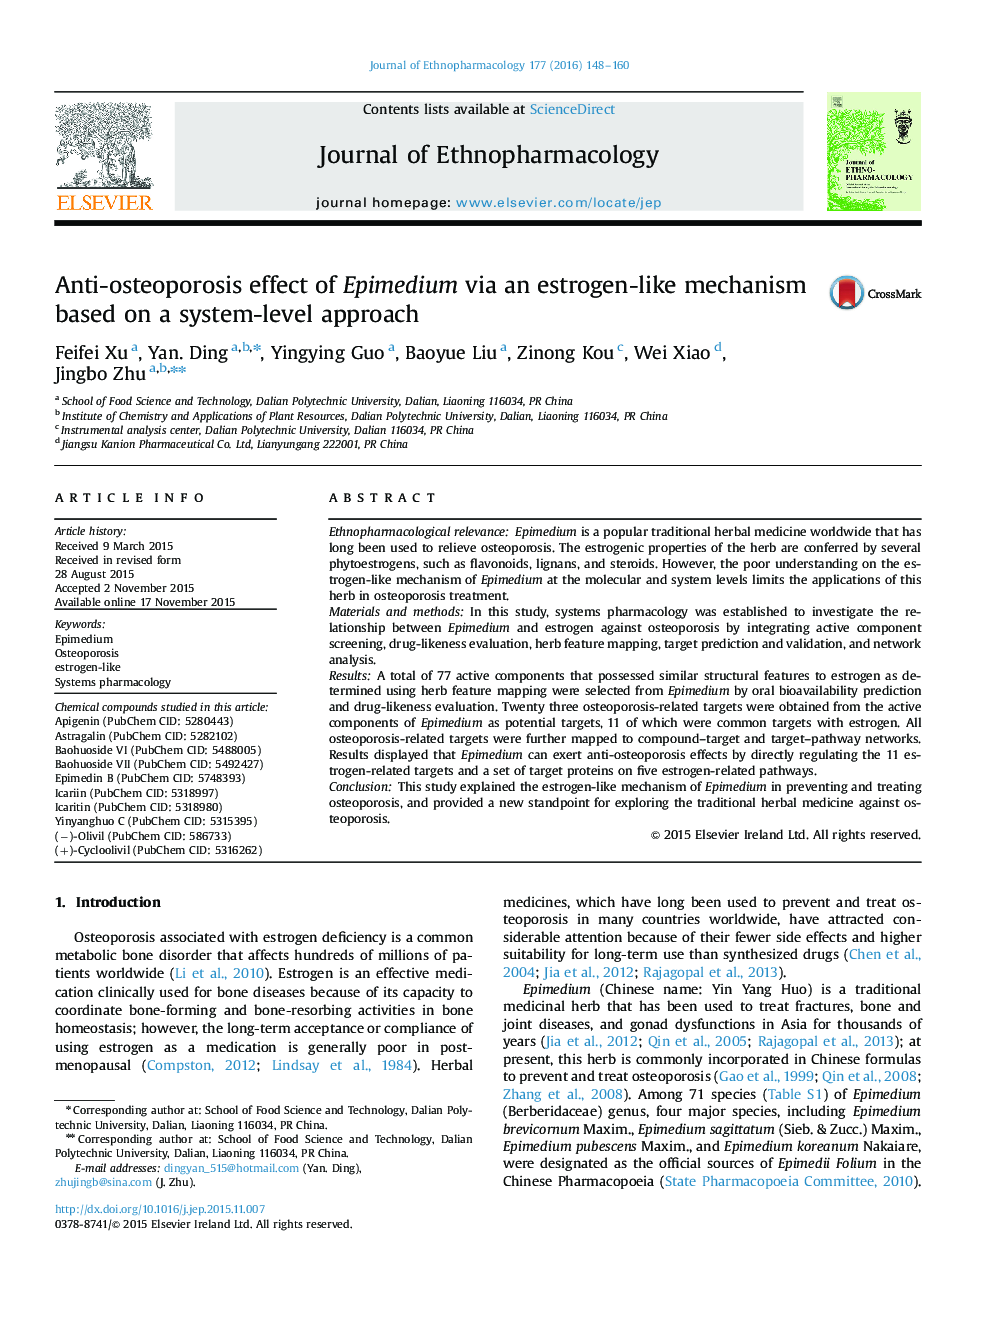 Anti-osteoporosis effect of Epimedium via an estrogen-like mechanism based on a system-level approach